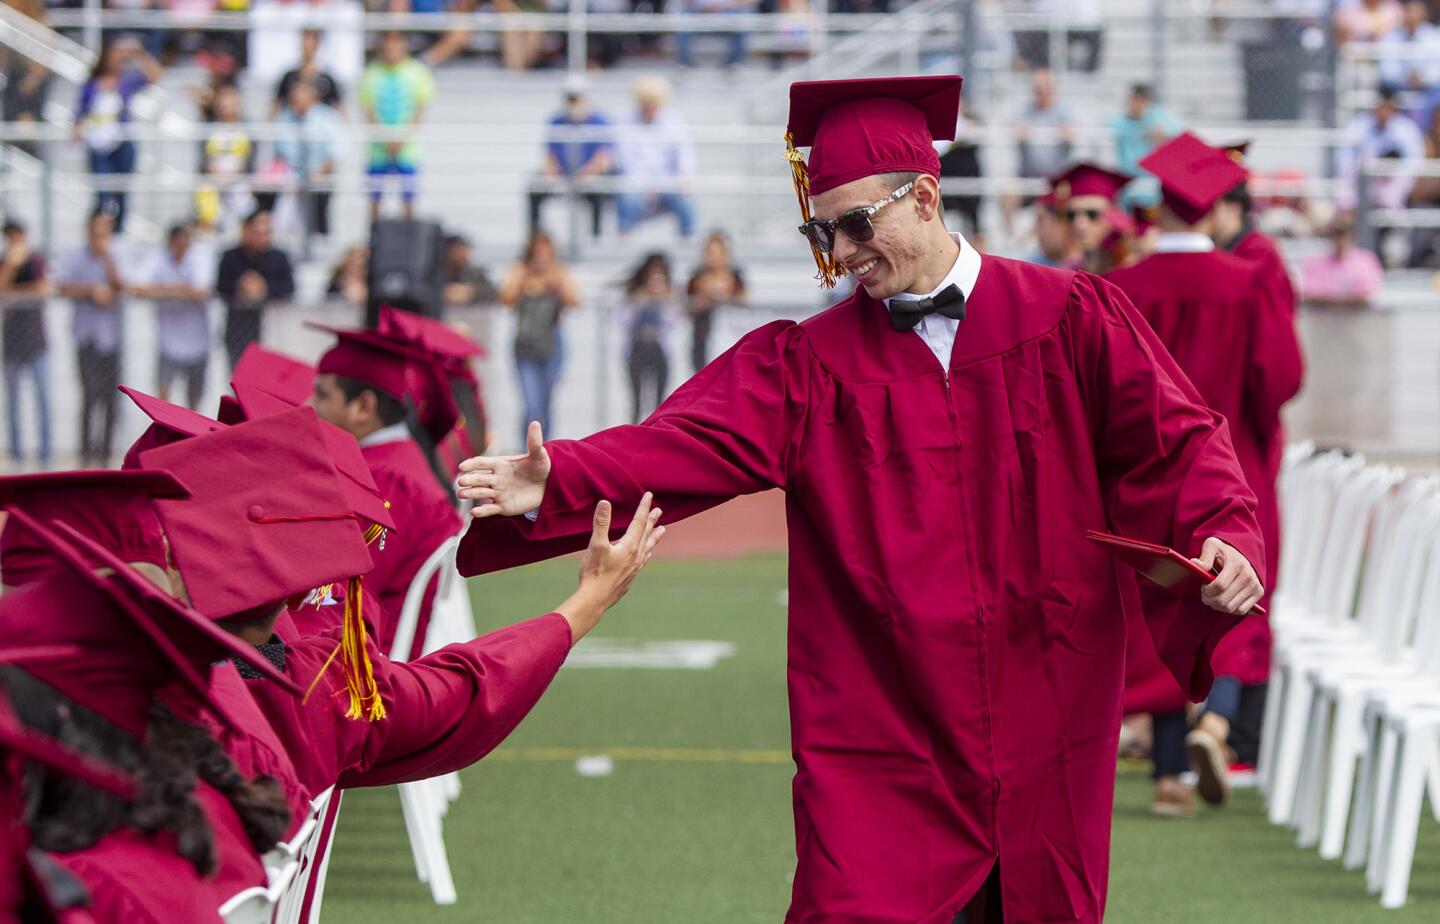 Photo Gallery: the 2018 Estancia High School graduation commencement